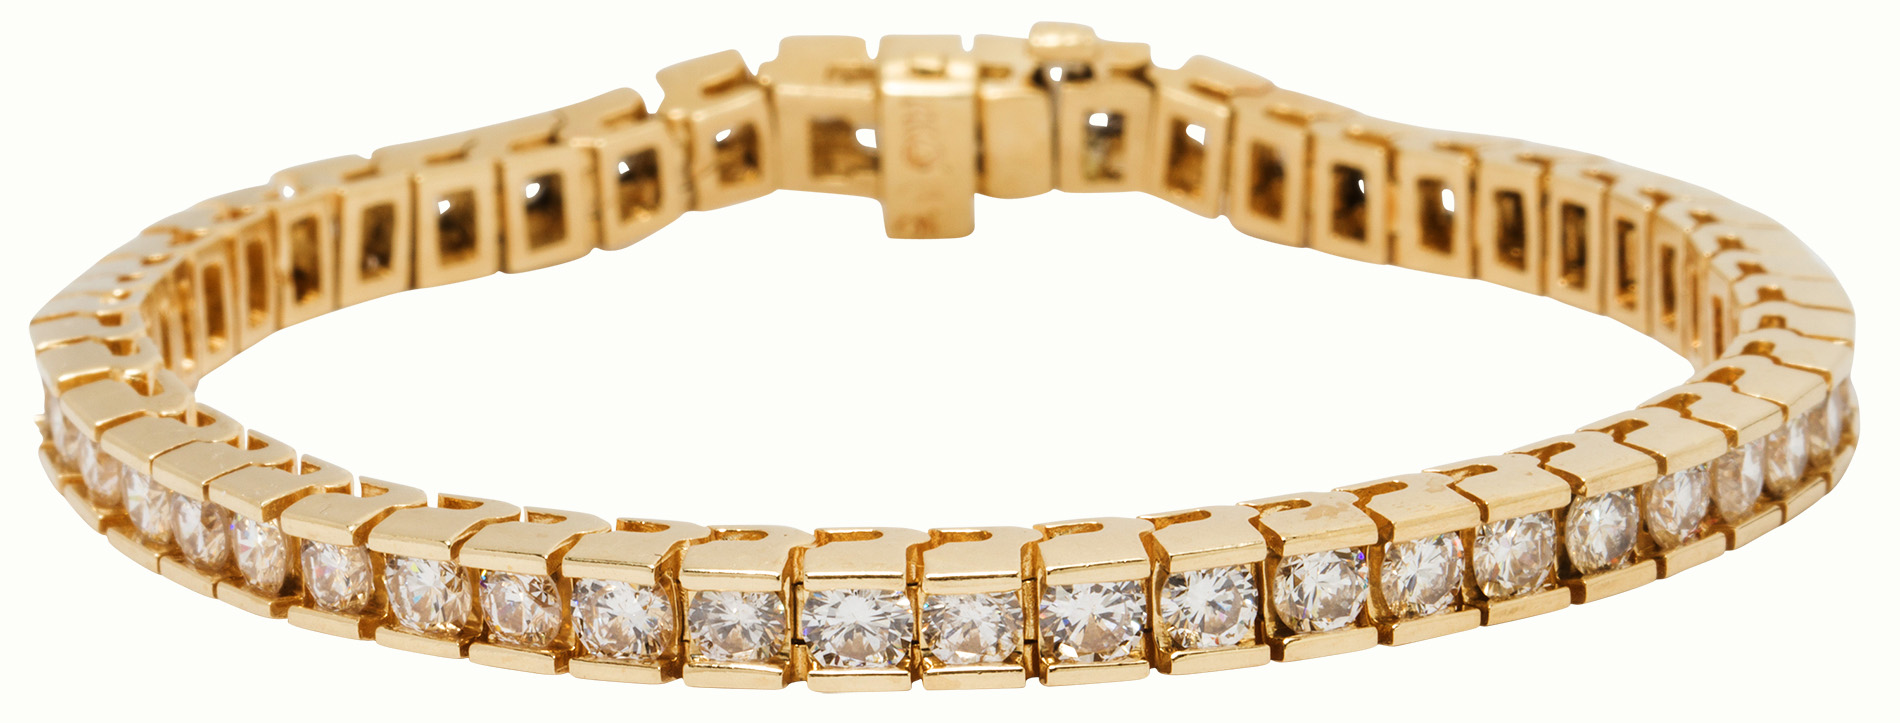 A diamond and fourteen karat gold bracelet.